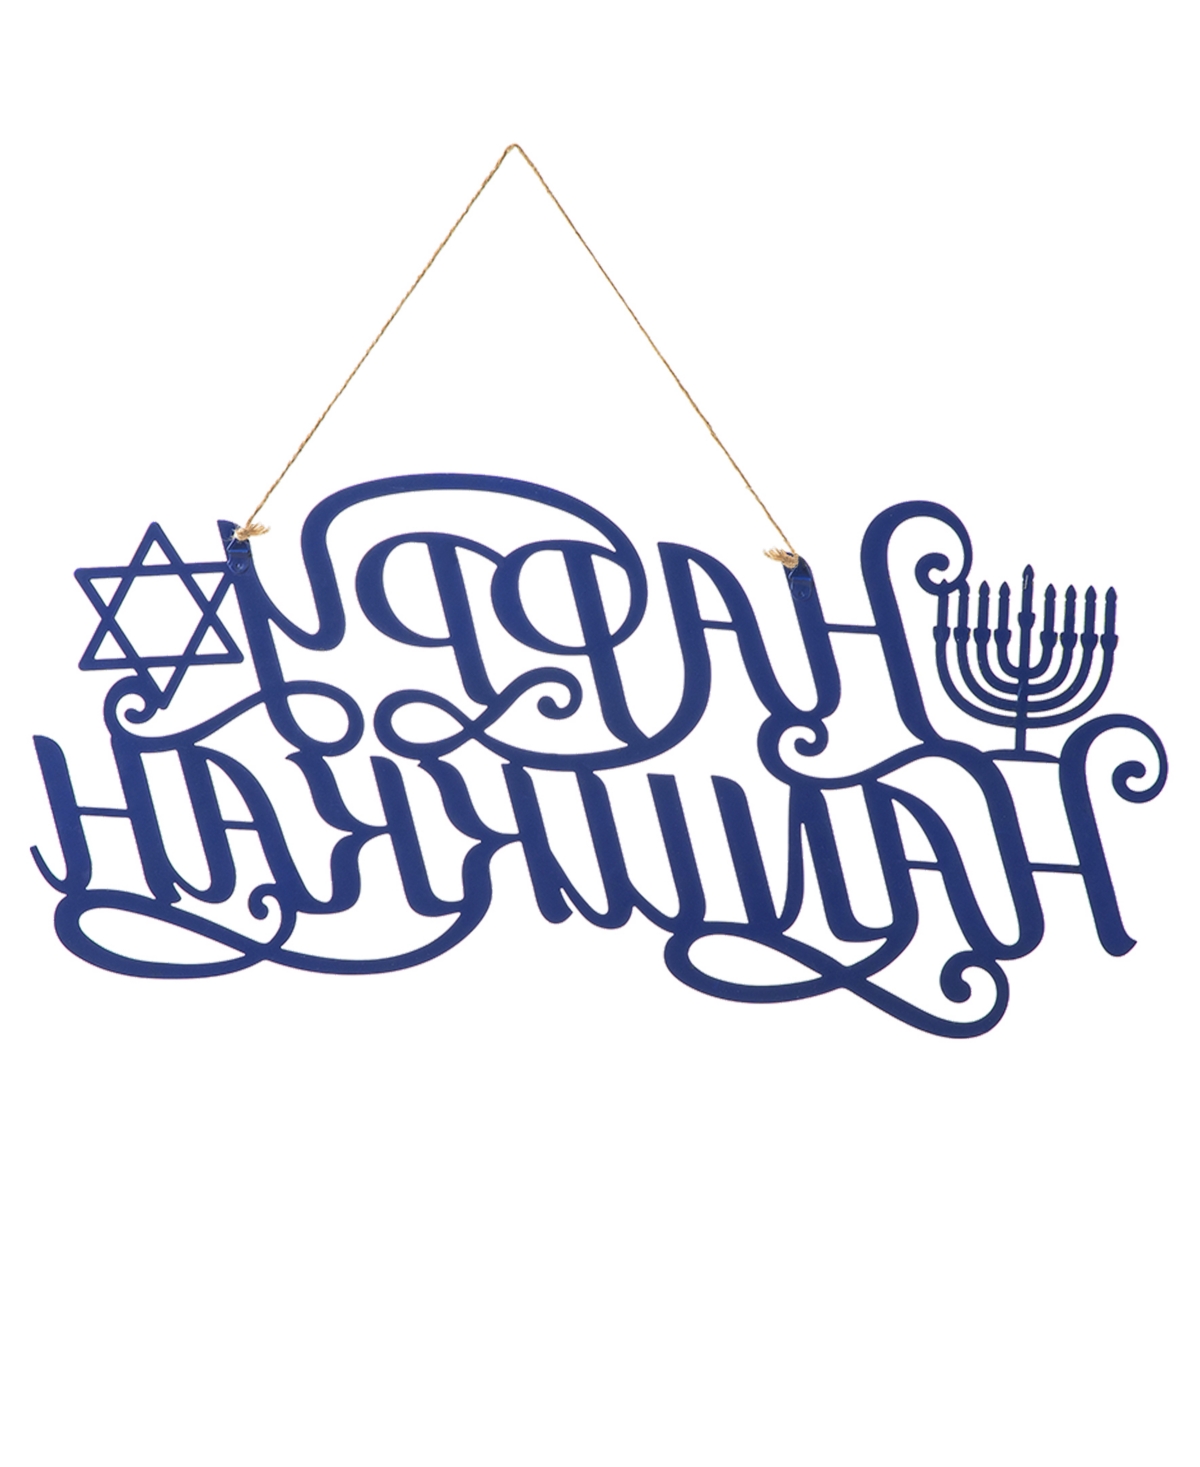 Happy Hanukkah E-Gift Card